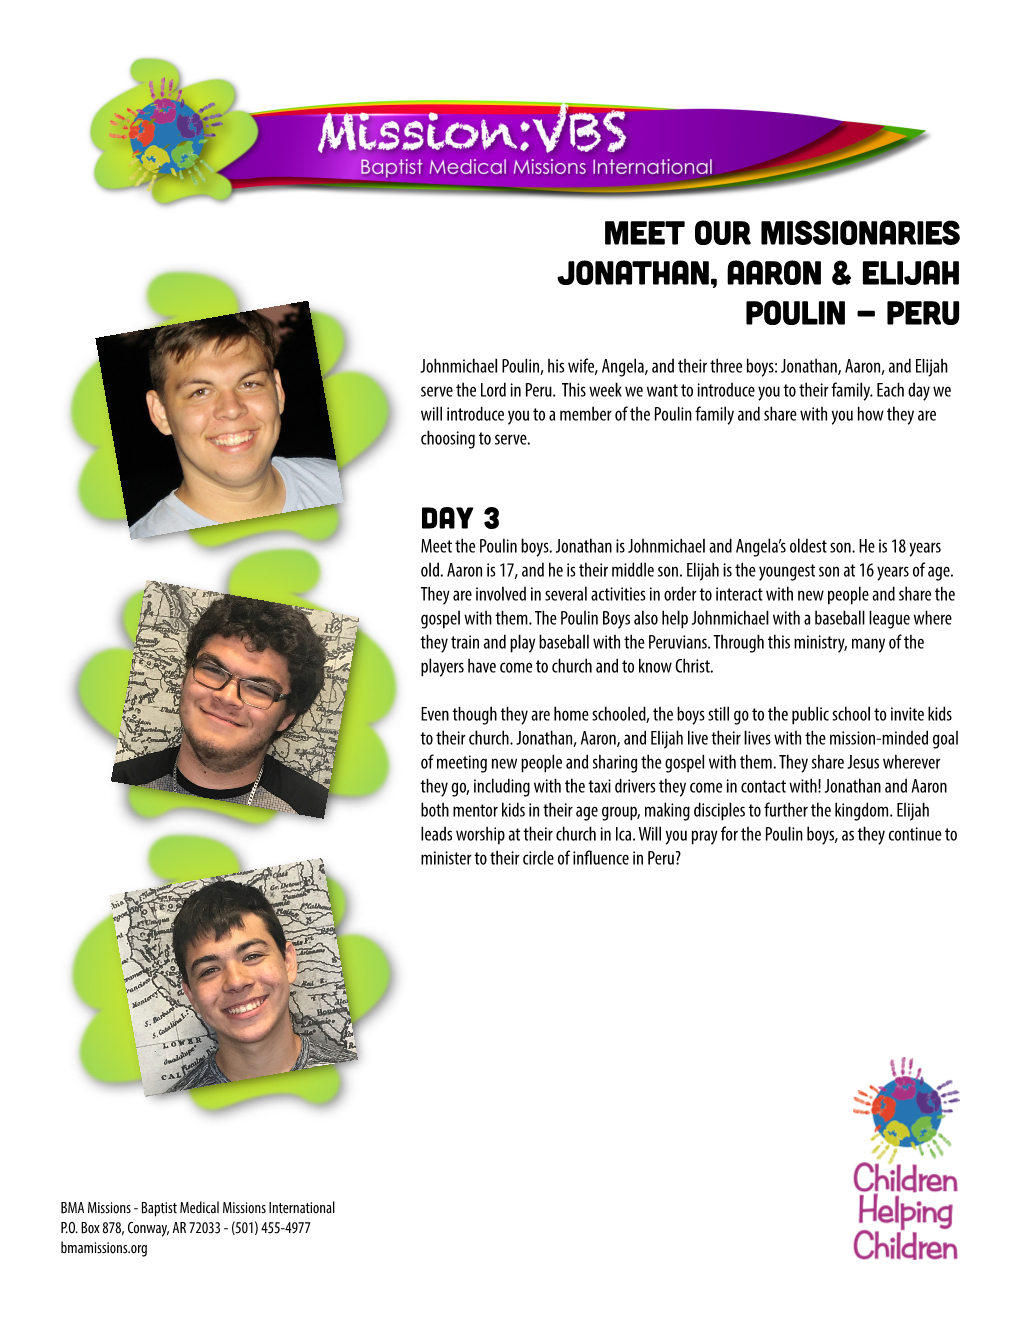 Meet Our Missionaries Jonathan, Aaron & Elijah Poulin